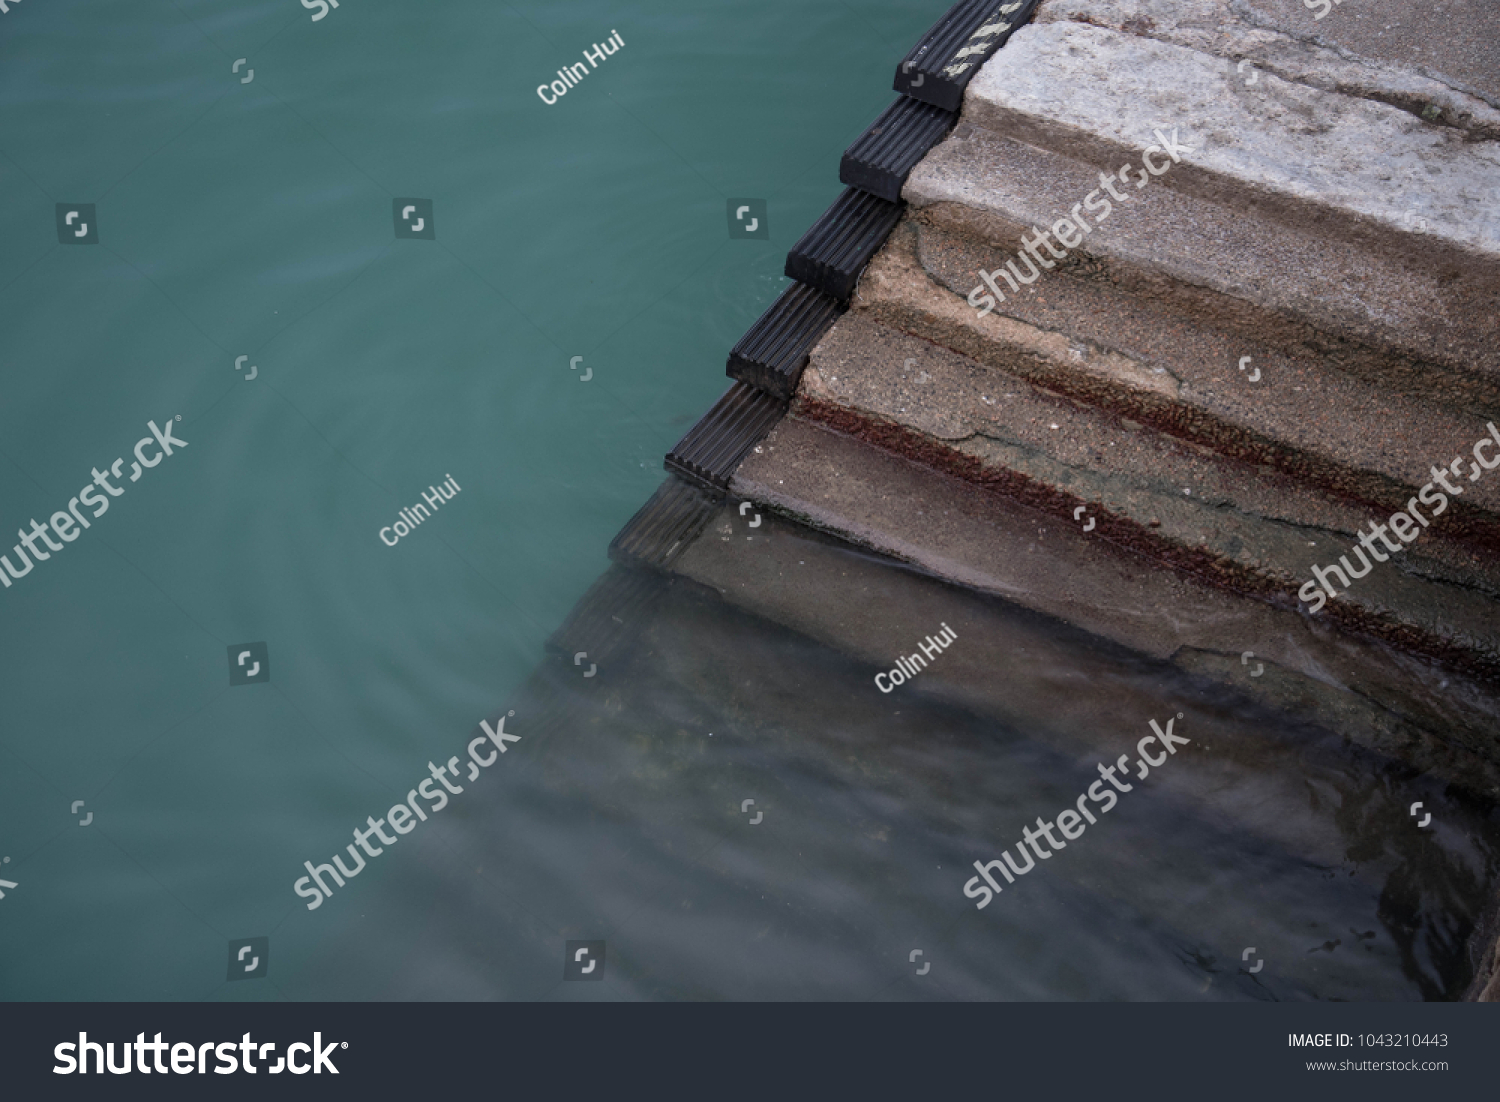 Half-submerged Staircase Taken at a dock #1043210443